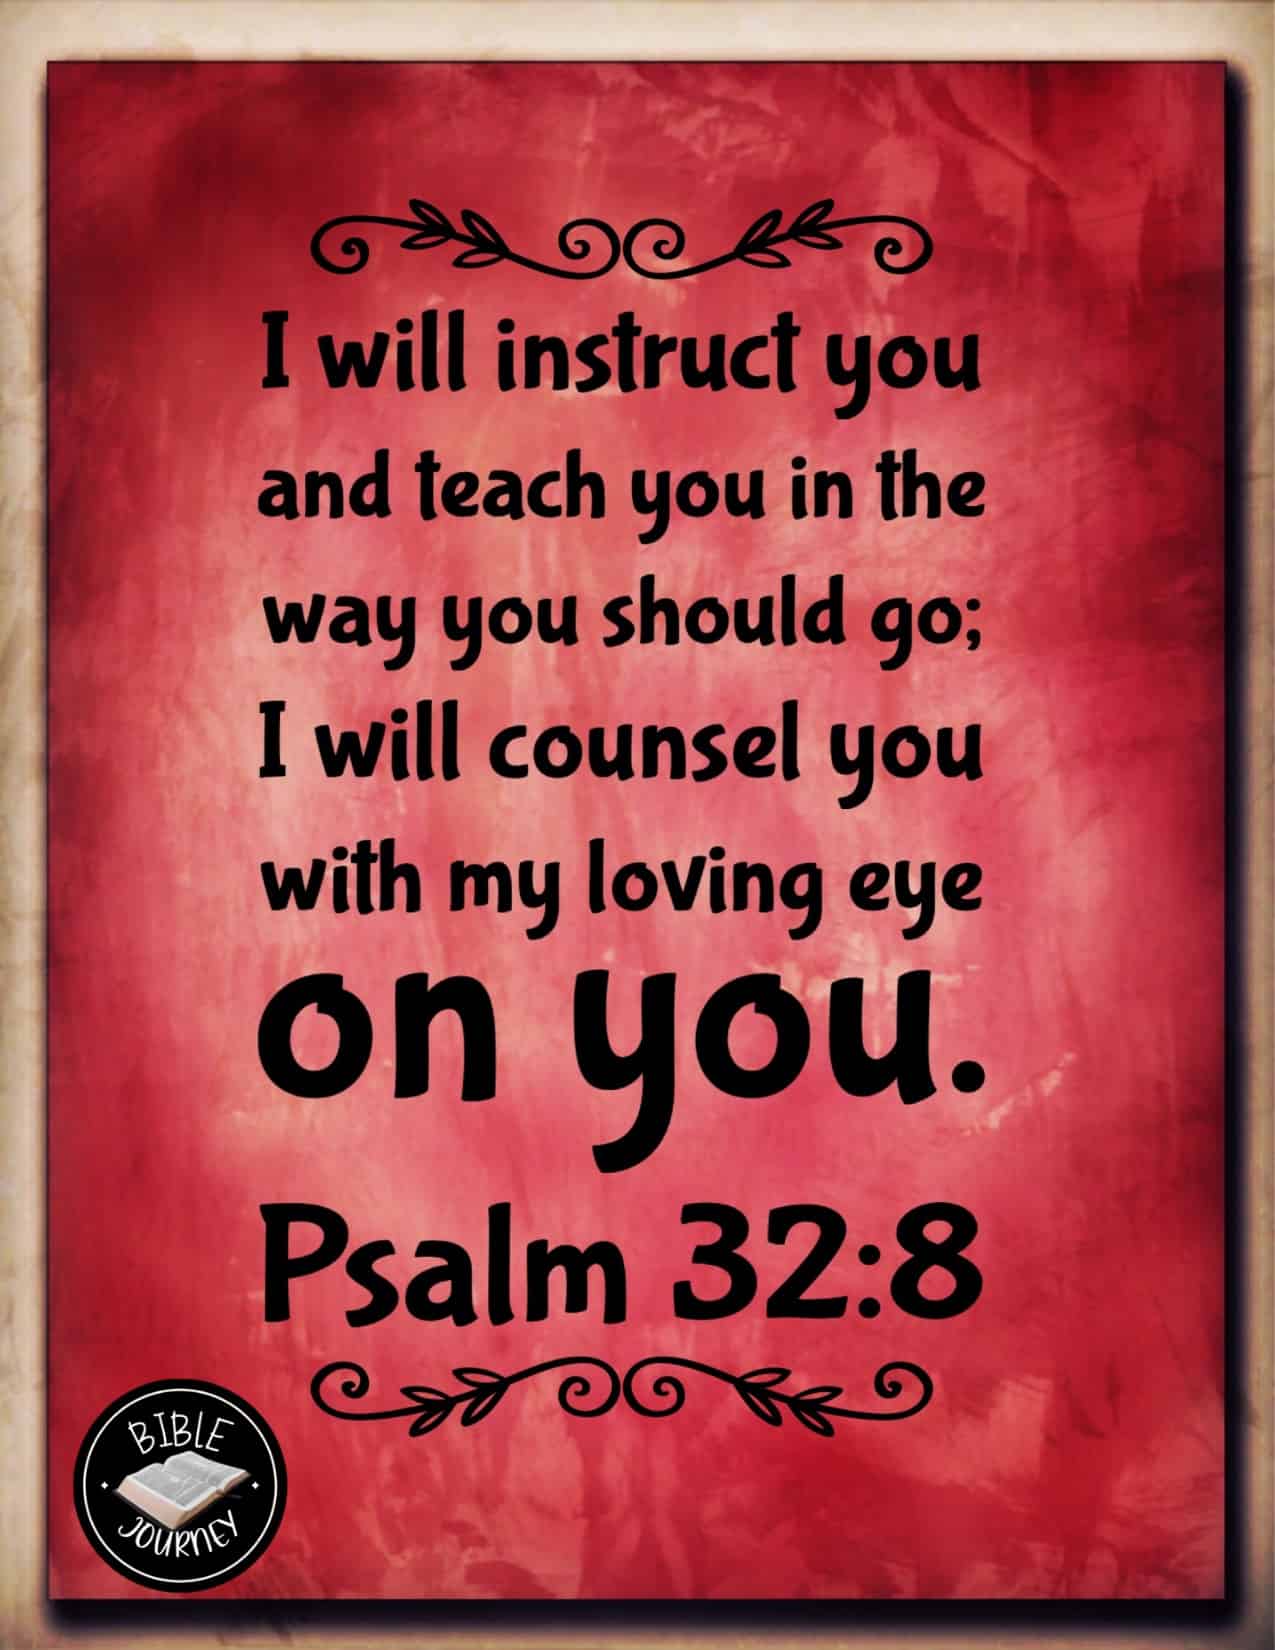 Encouraging Bible Verse Image - Psalm 32:8 NIV